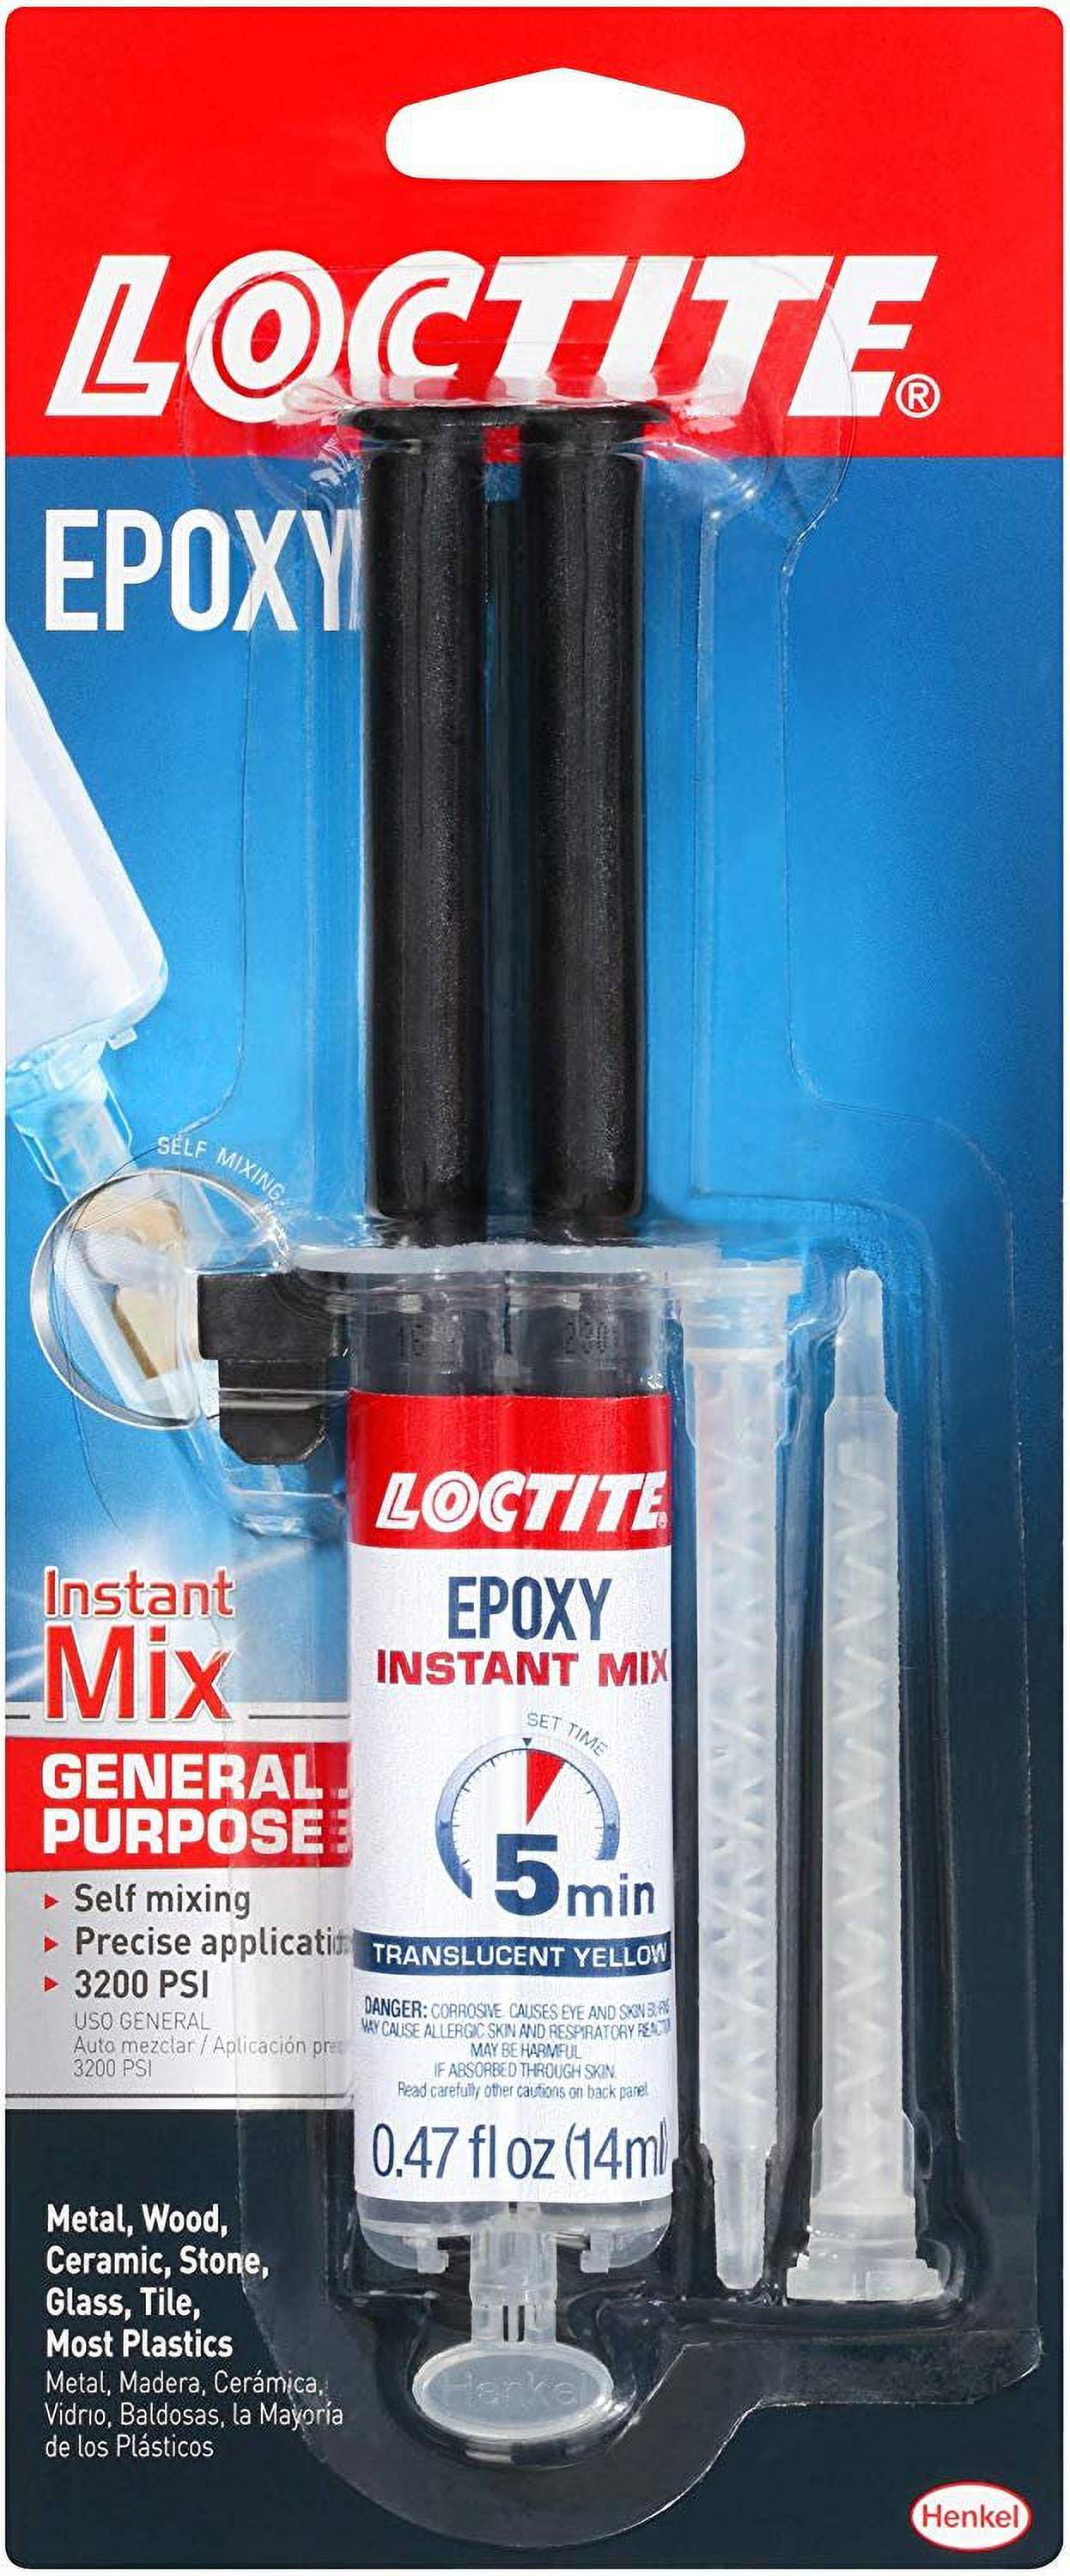 Loctite 400 mL Cartridge Two Part Epoxy 50 min Working Time 398465